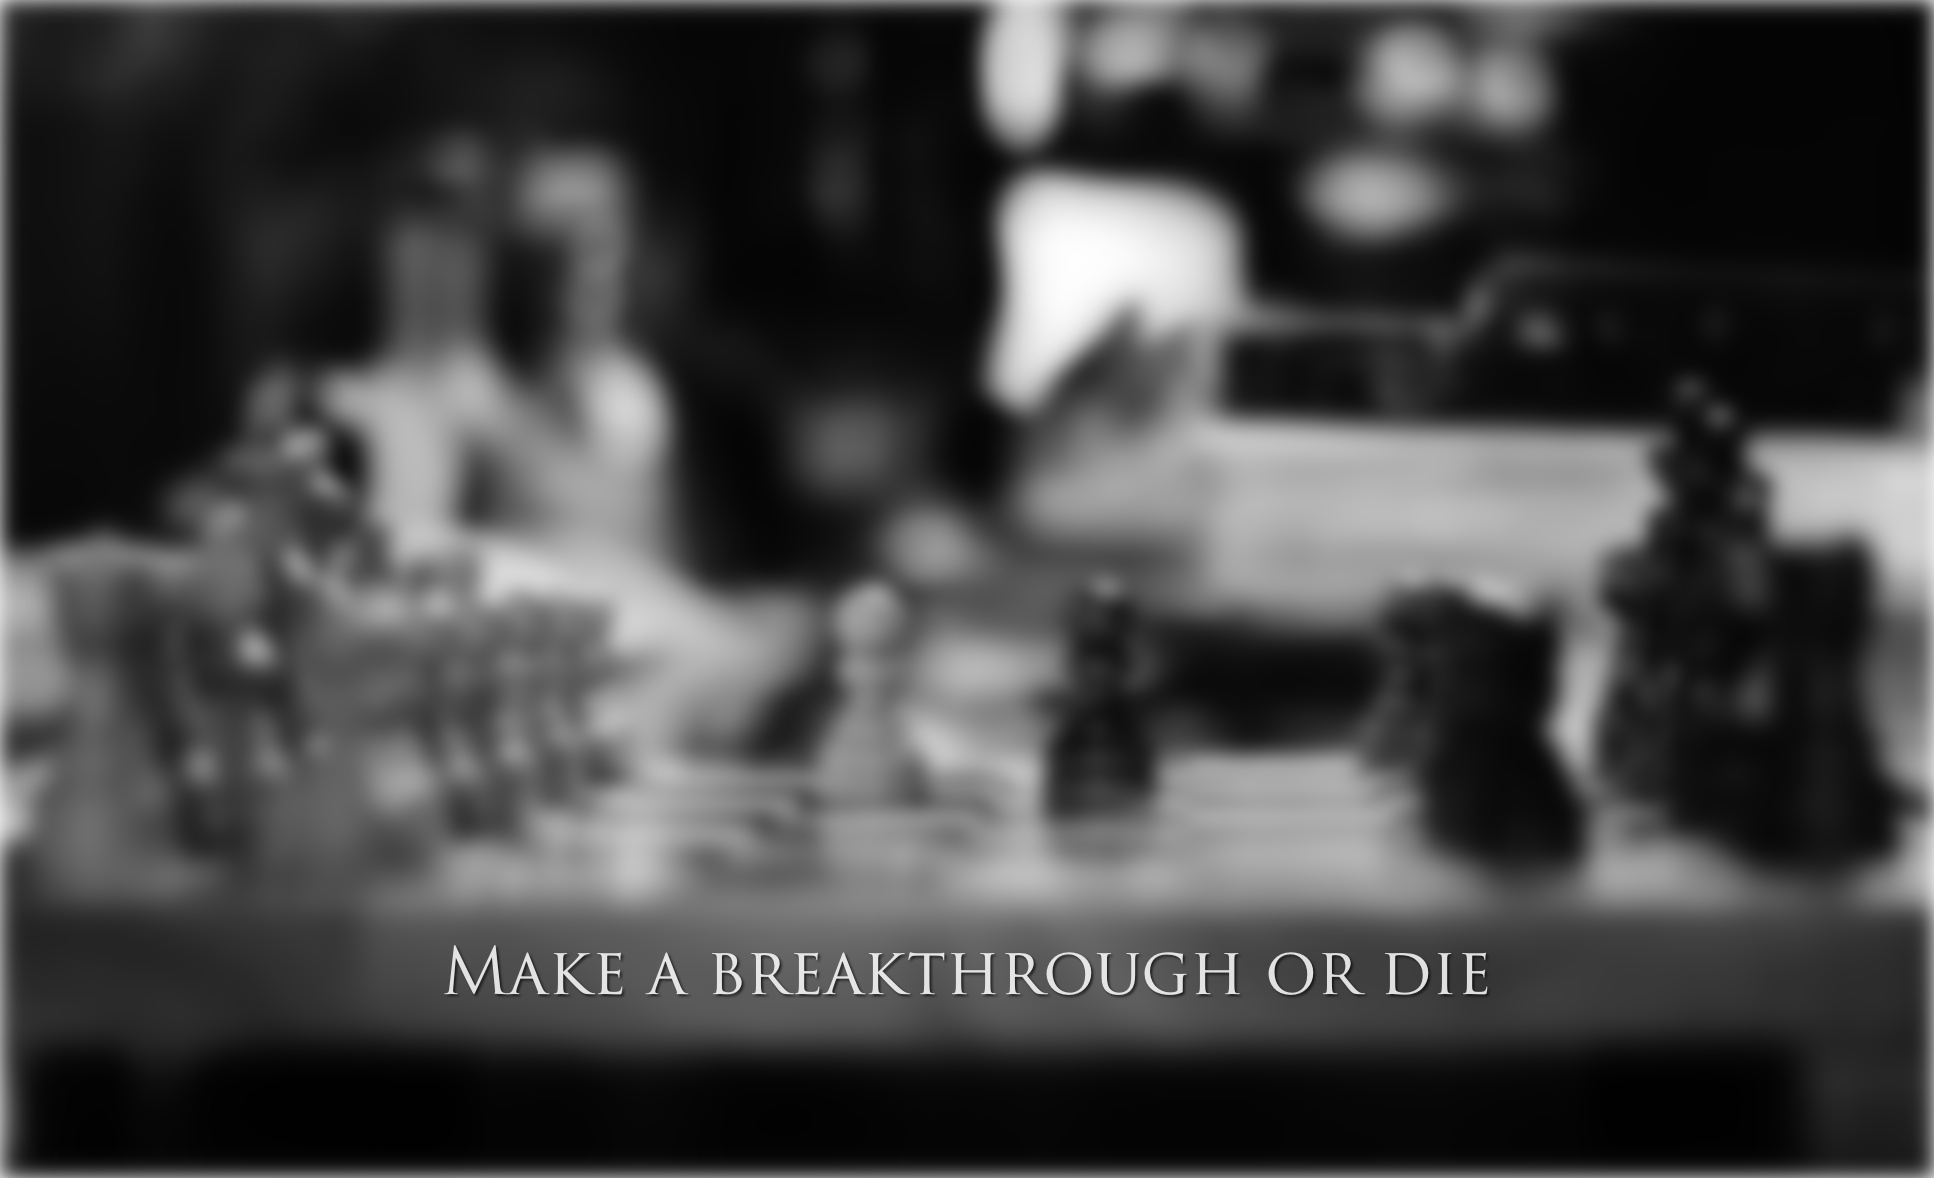 Make a breakthrough or die